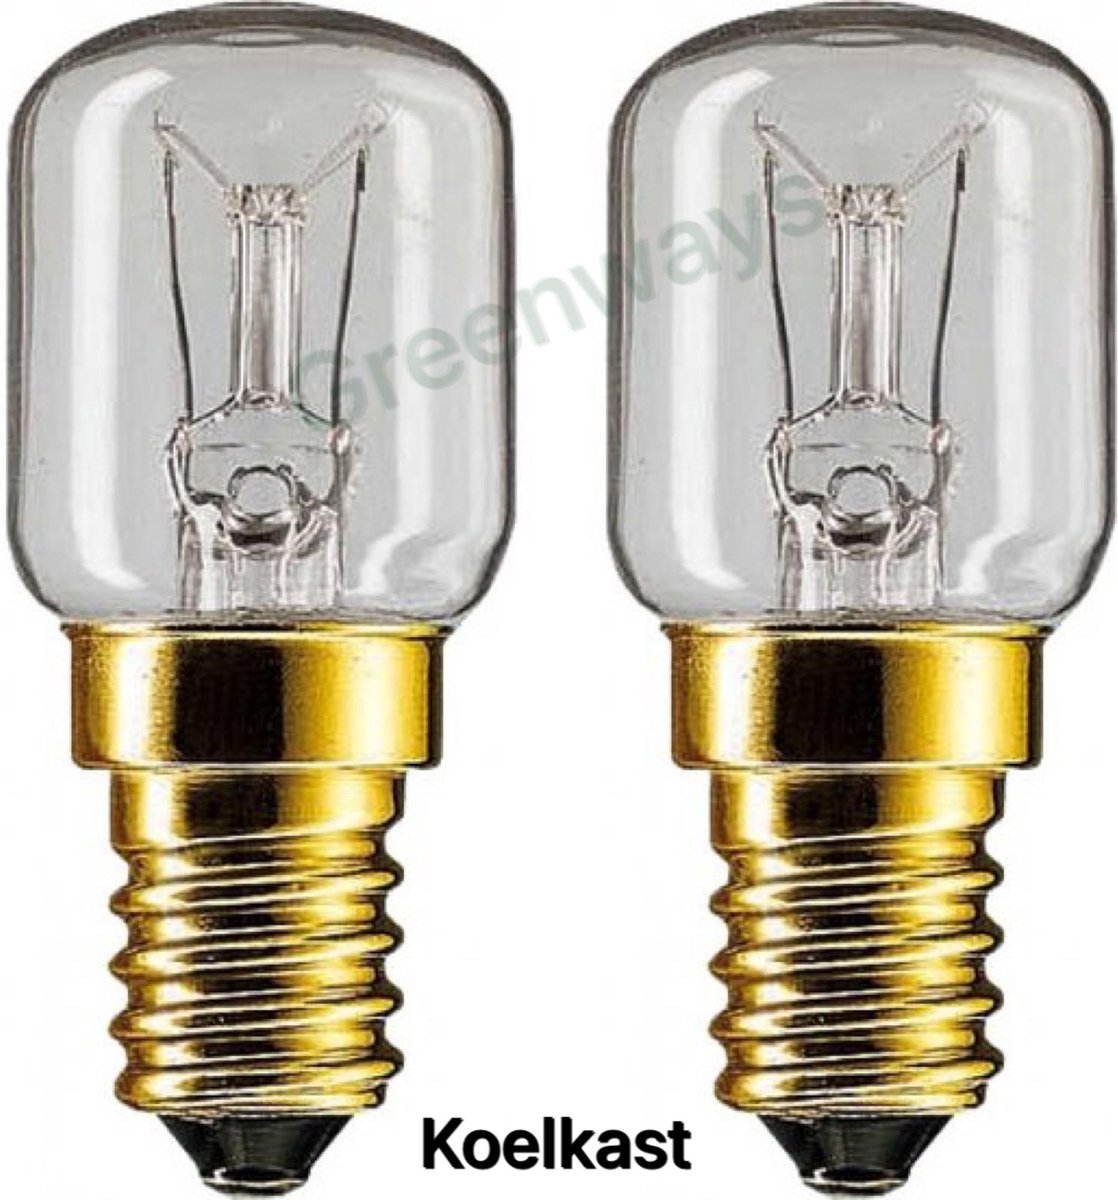 Greenways - Koelkastlampje - 25Watt - E14 - Koelkast - Lamp - Helder 25W - Fridge - Freezer (2 stuks)